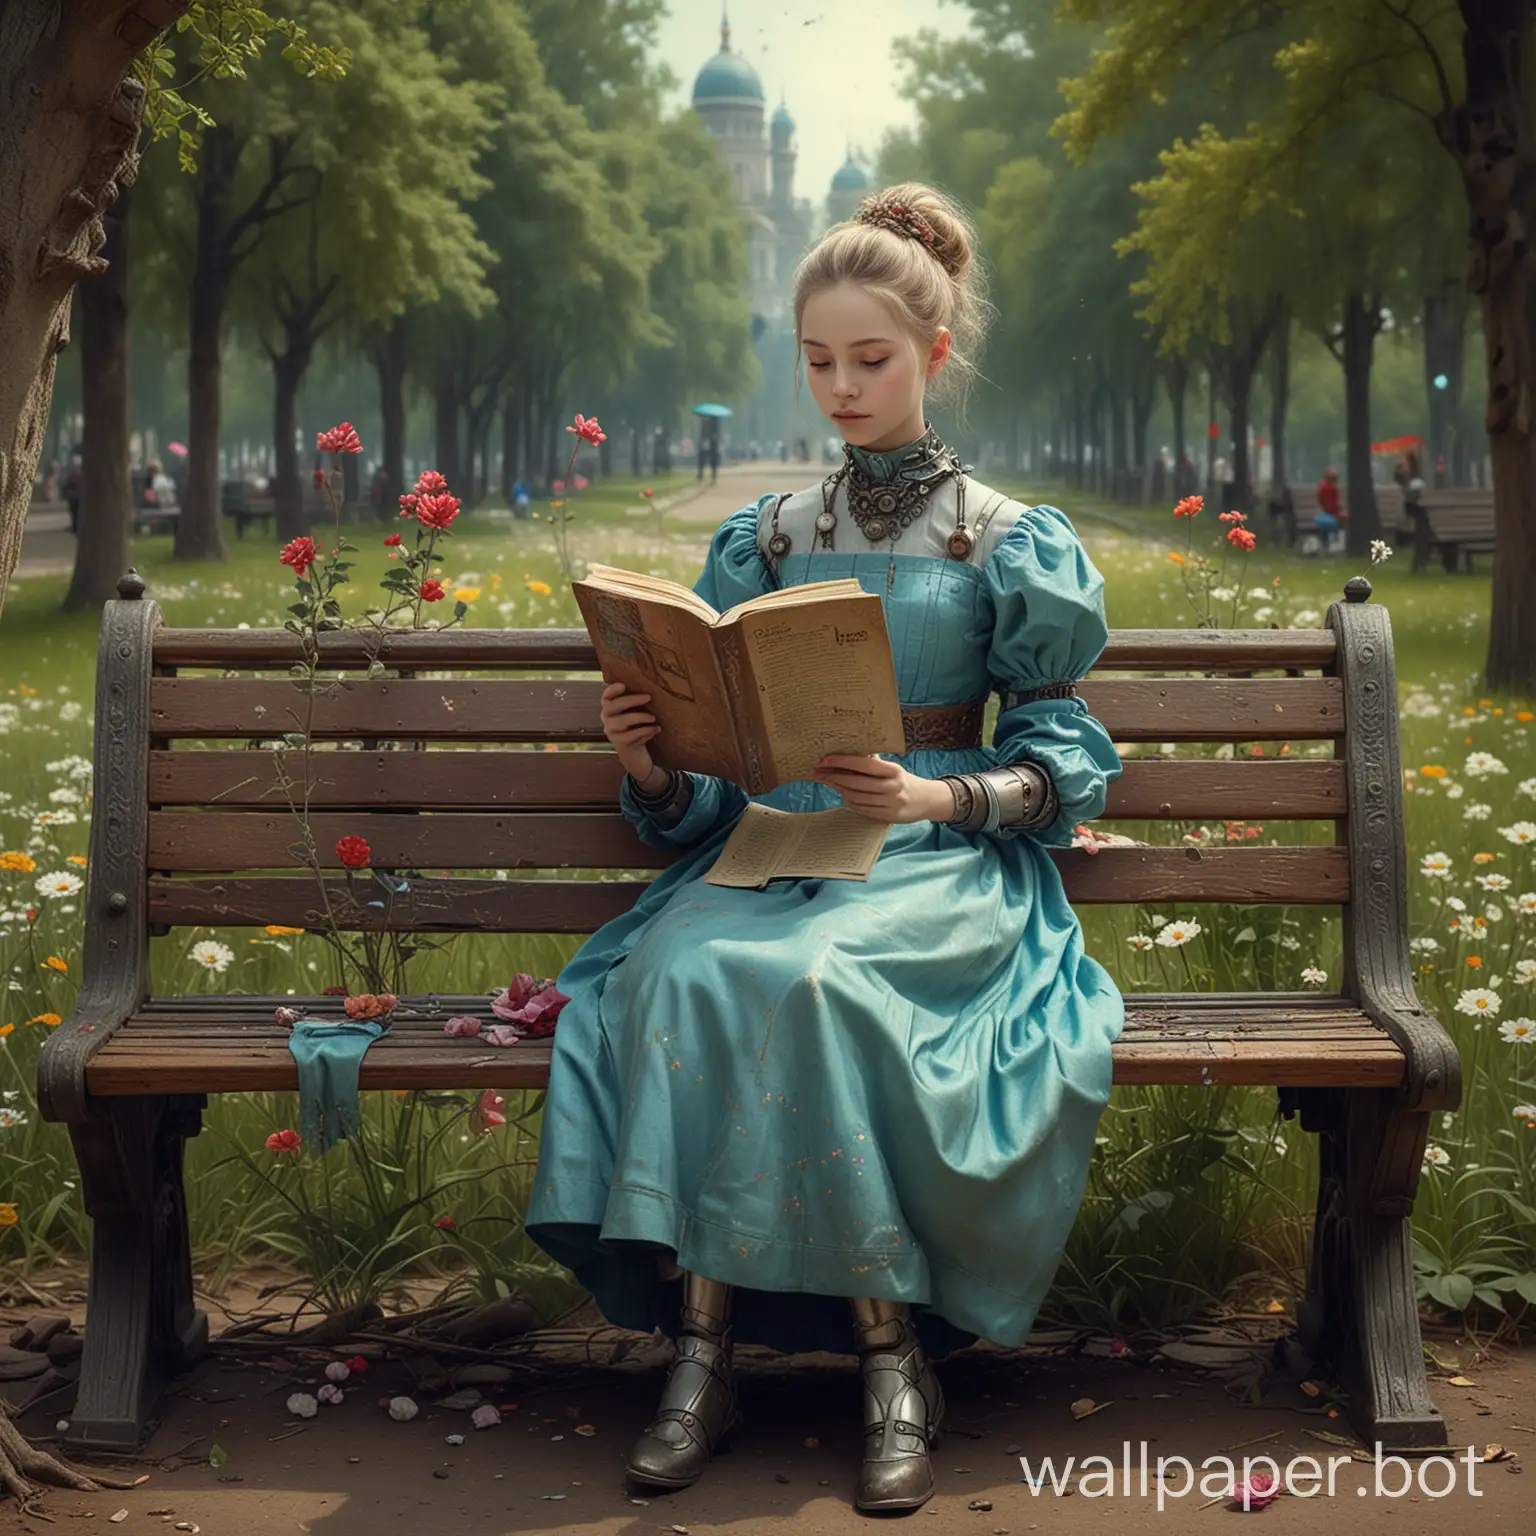 Surreal-Digital-Illustration-Caring-Robot-and-Girl-Reading-in-Park